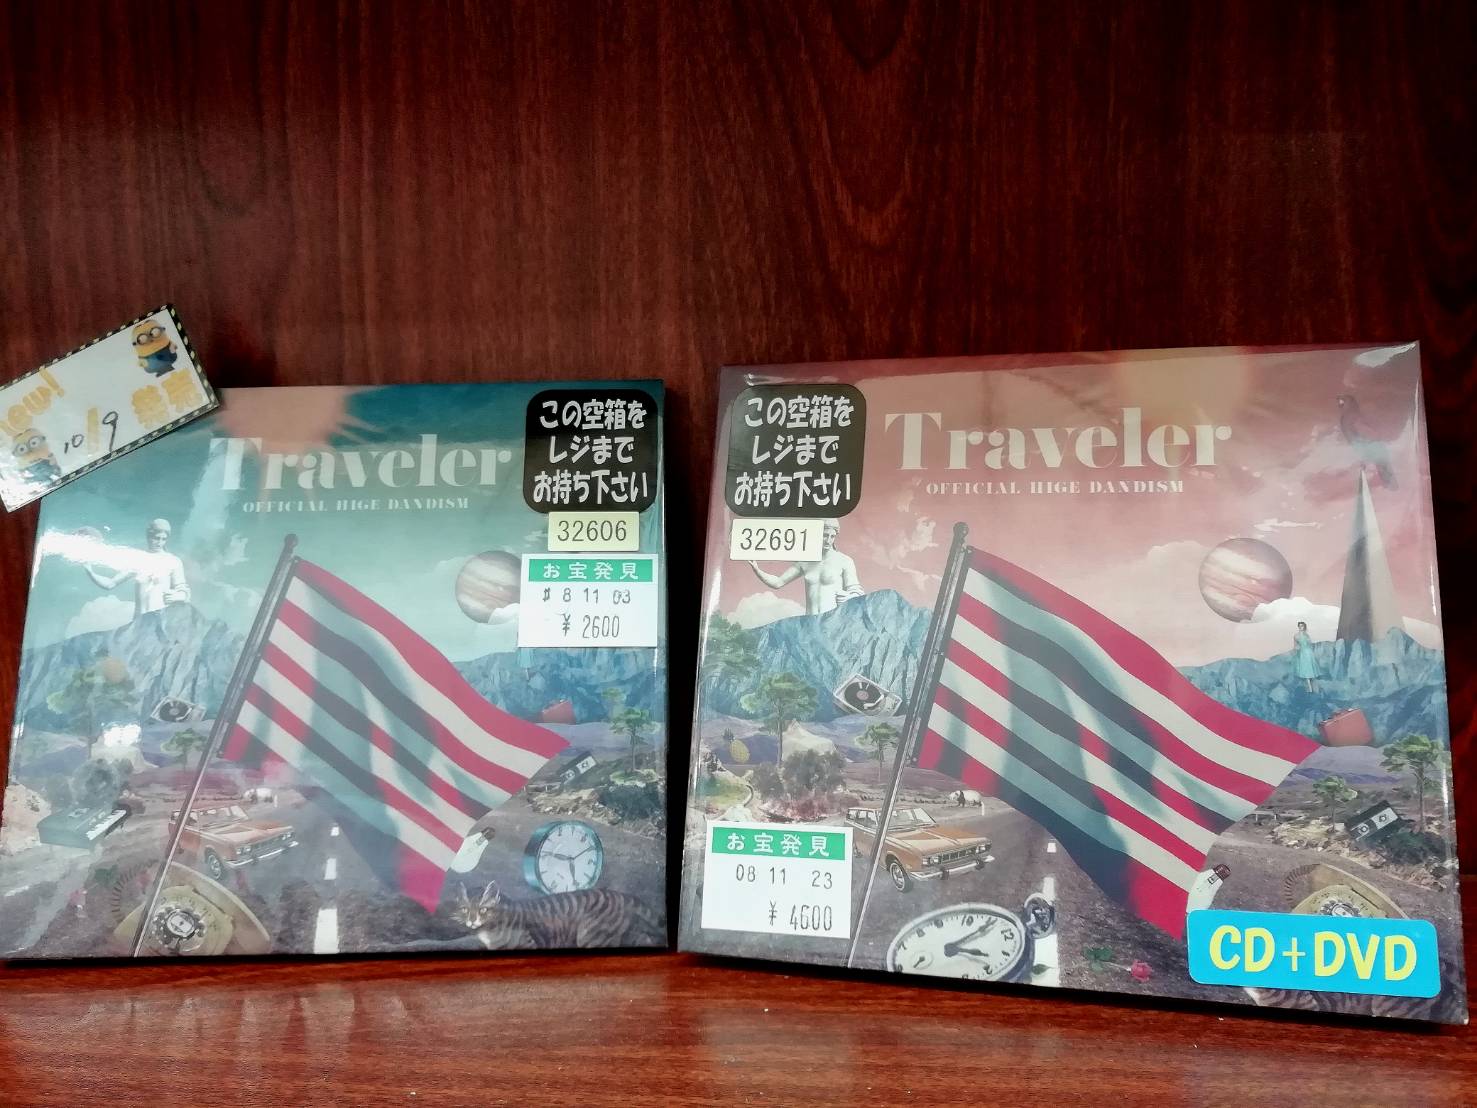 Traveler Official髭男dism DVD2枚